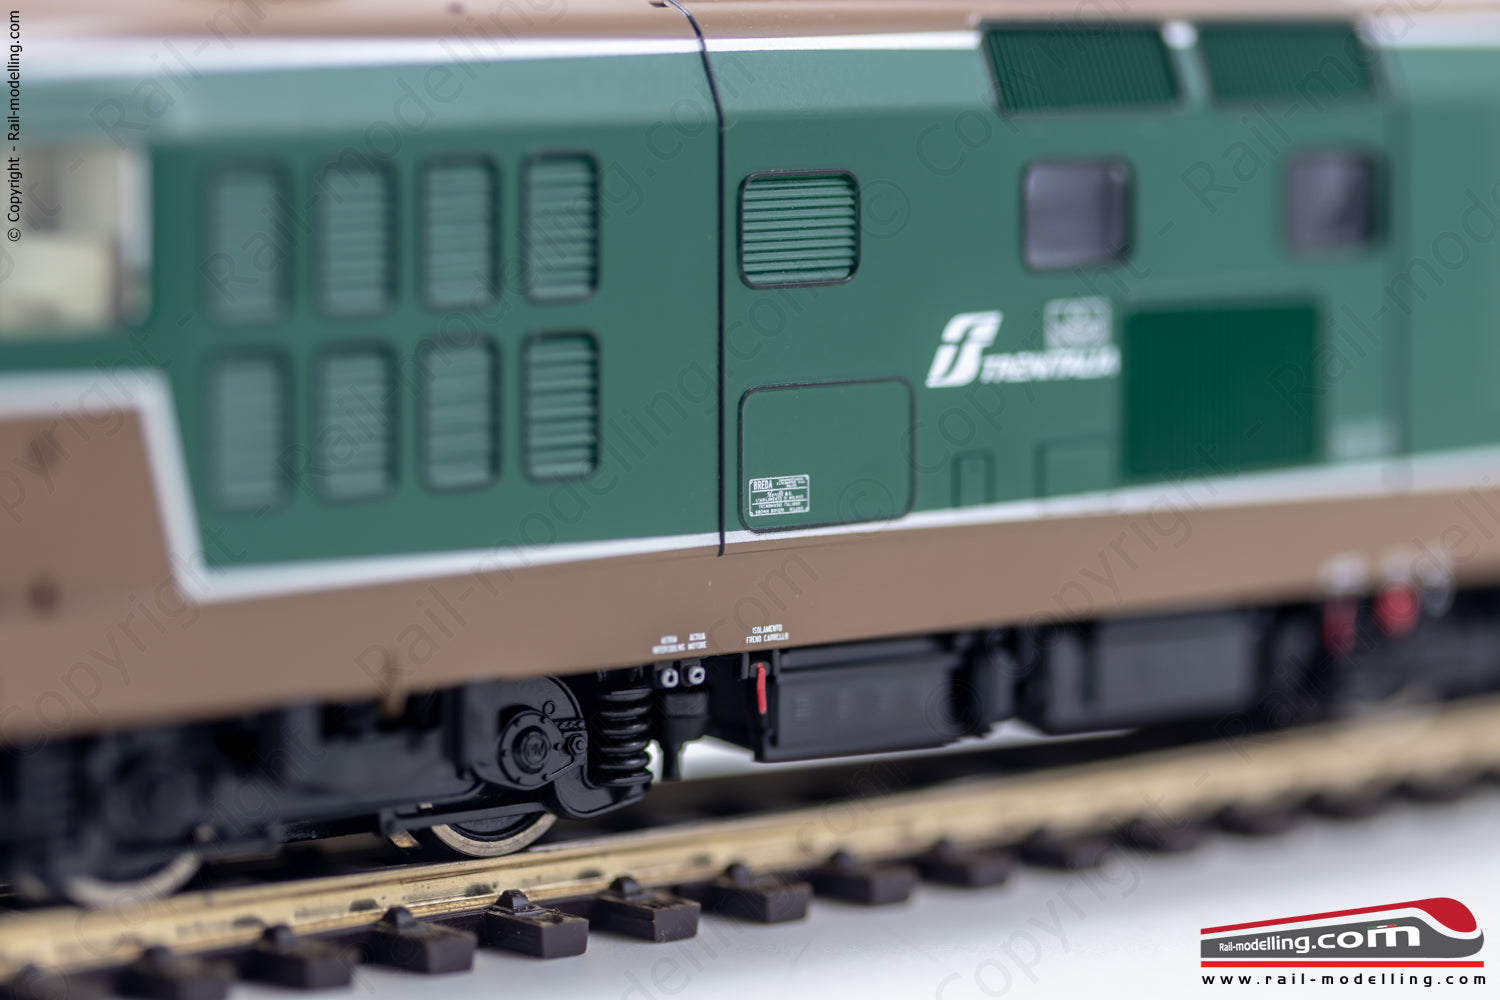 ROCO 73002 - H0 1:87 - Locomotiva diesel FS D 343 2015 livrea Trenitalia Ep. IV